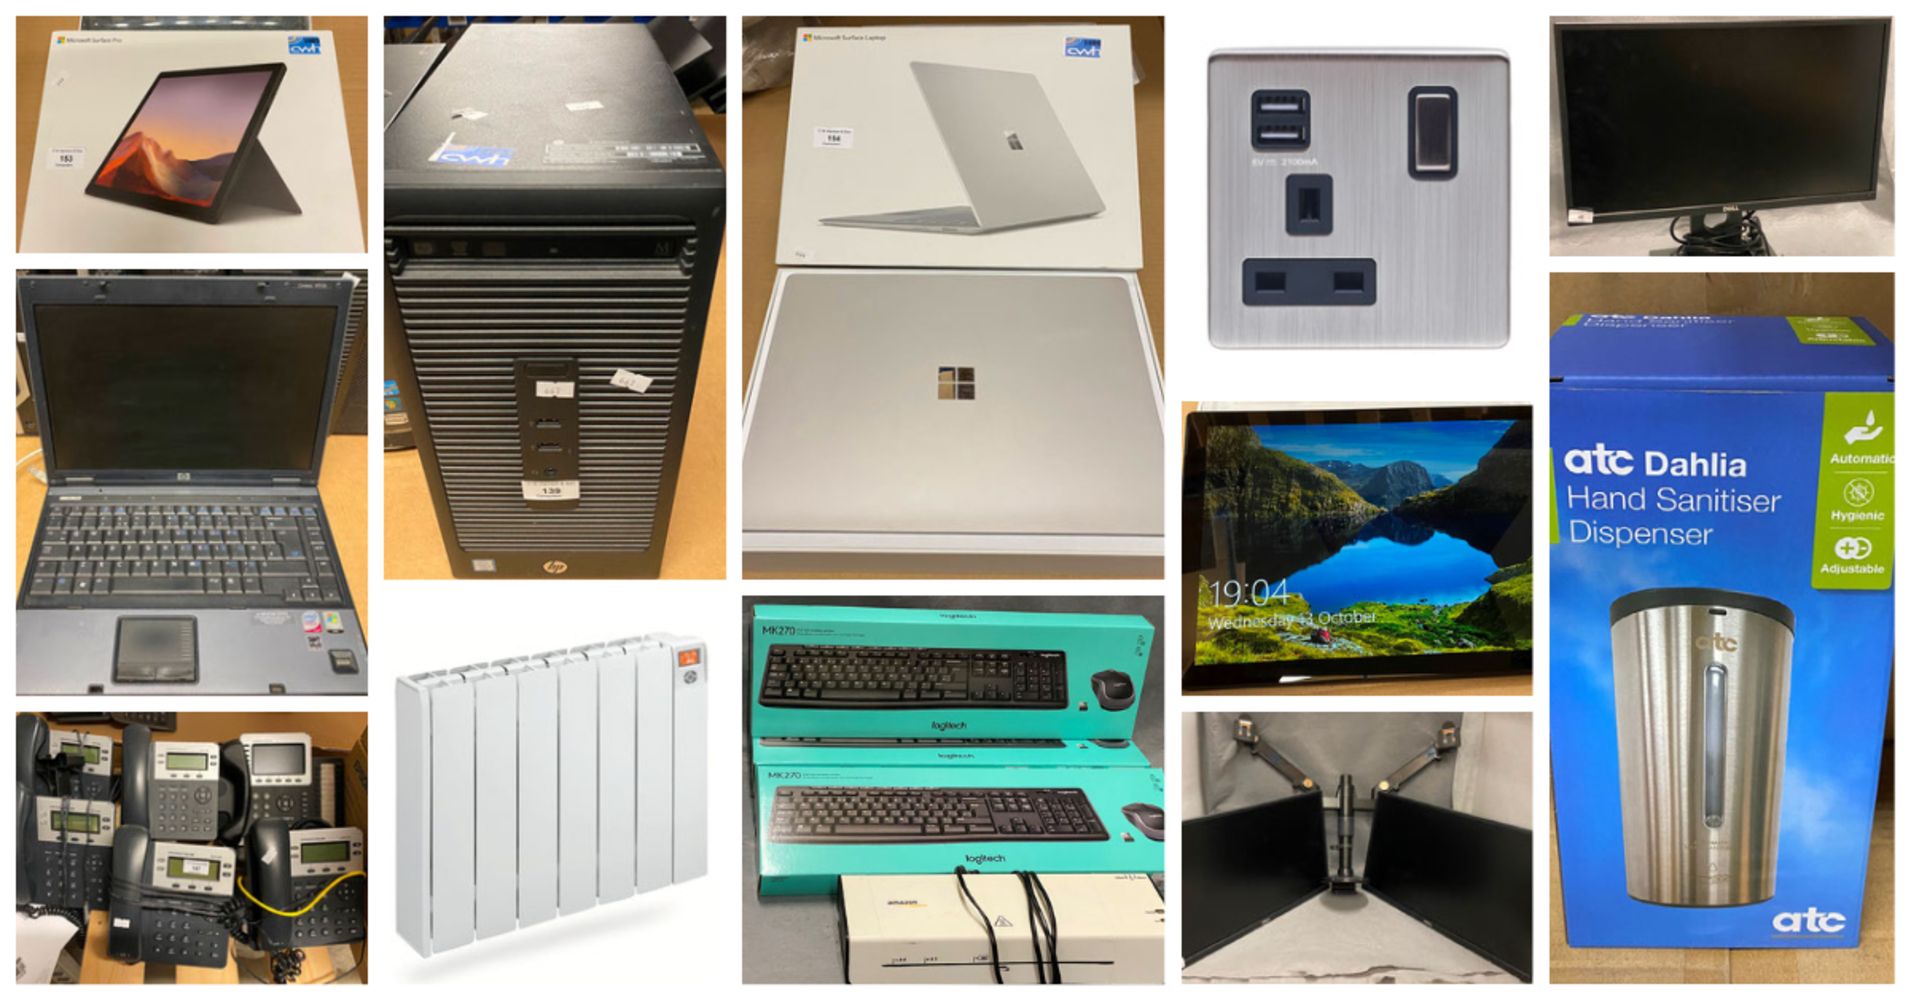 Computers, Laptops, Monitors, Stands, Accessories, Eurolite USB Sockets, ATC Electric Radiators, Sanitiser Dispensers, Pallets of Sanitiser